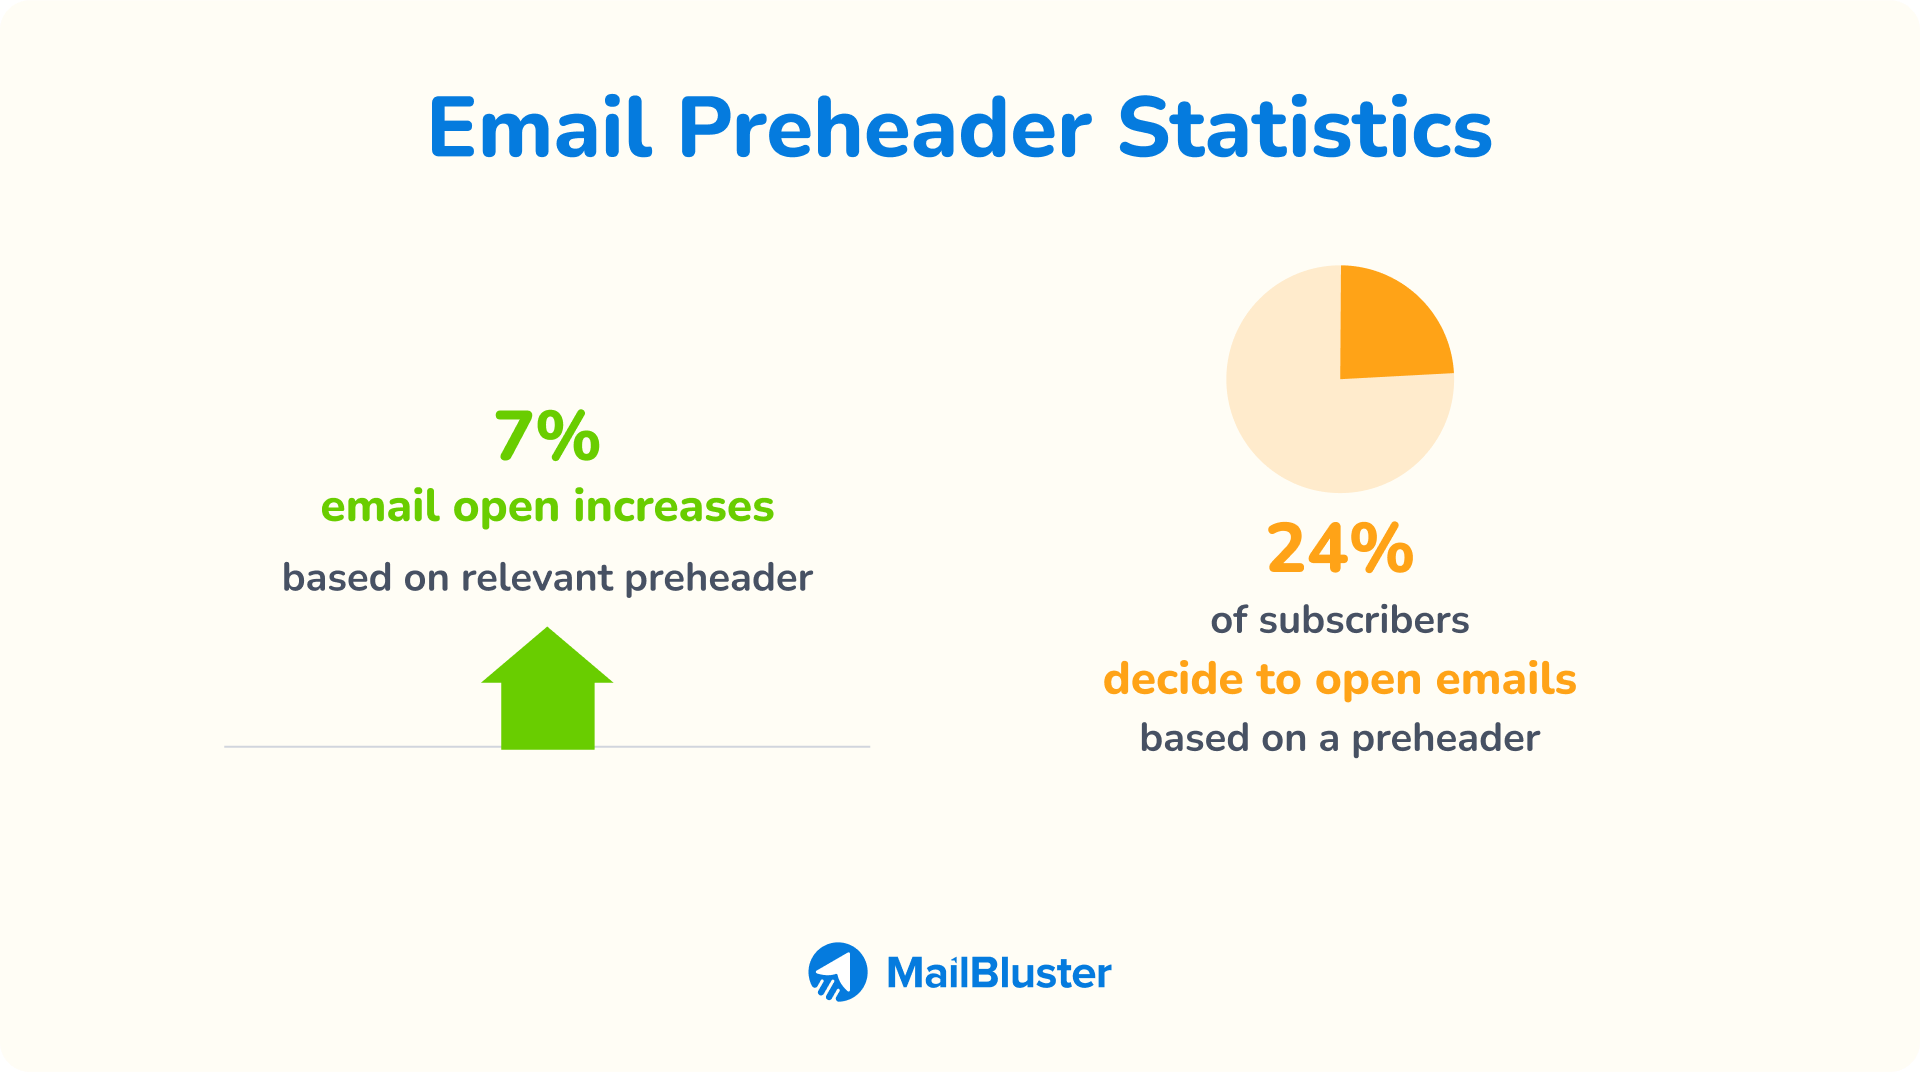 Email preheader statistics